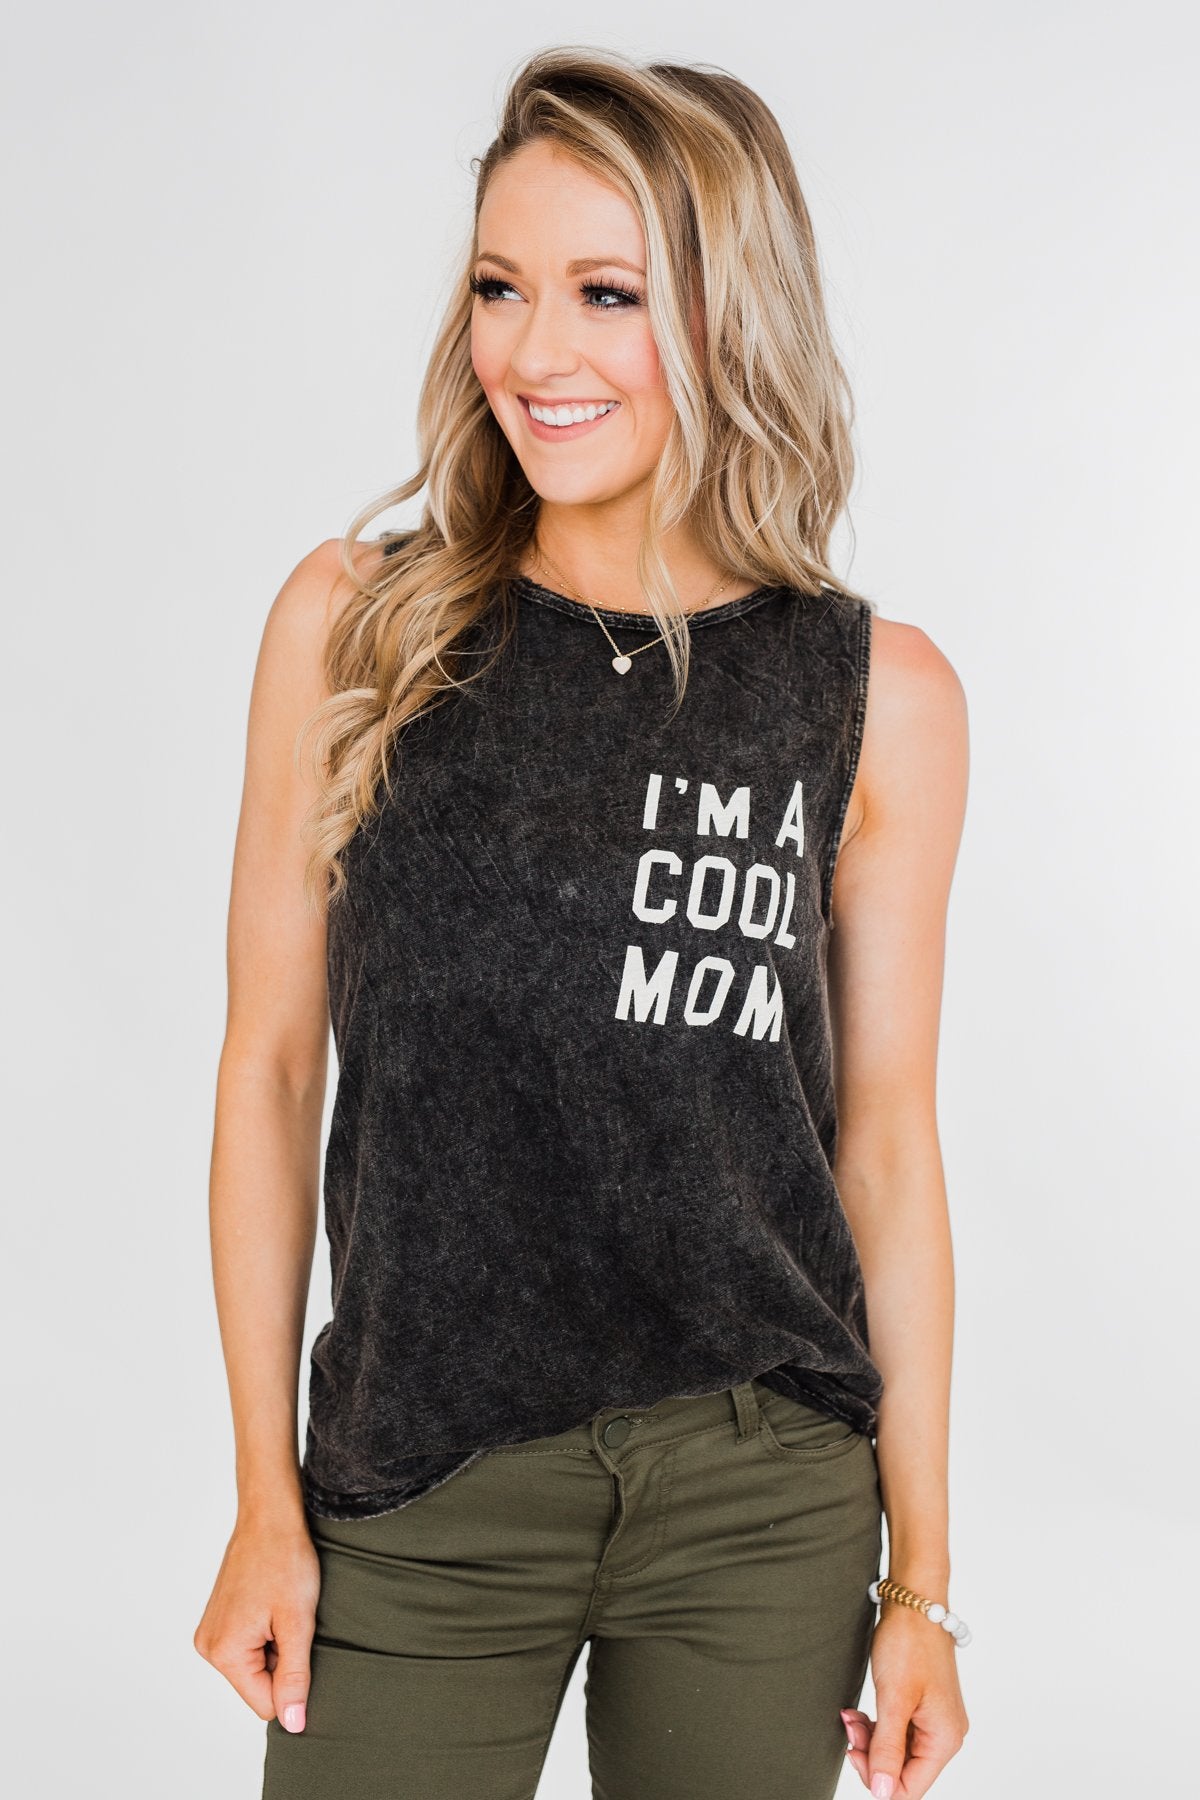 "I'm a Cool Mom" Tank Top- Black Vintage